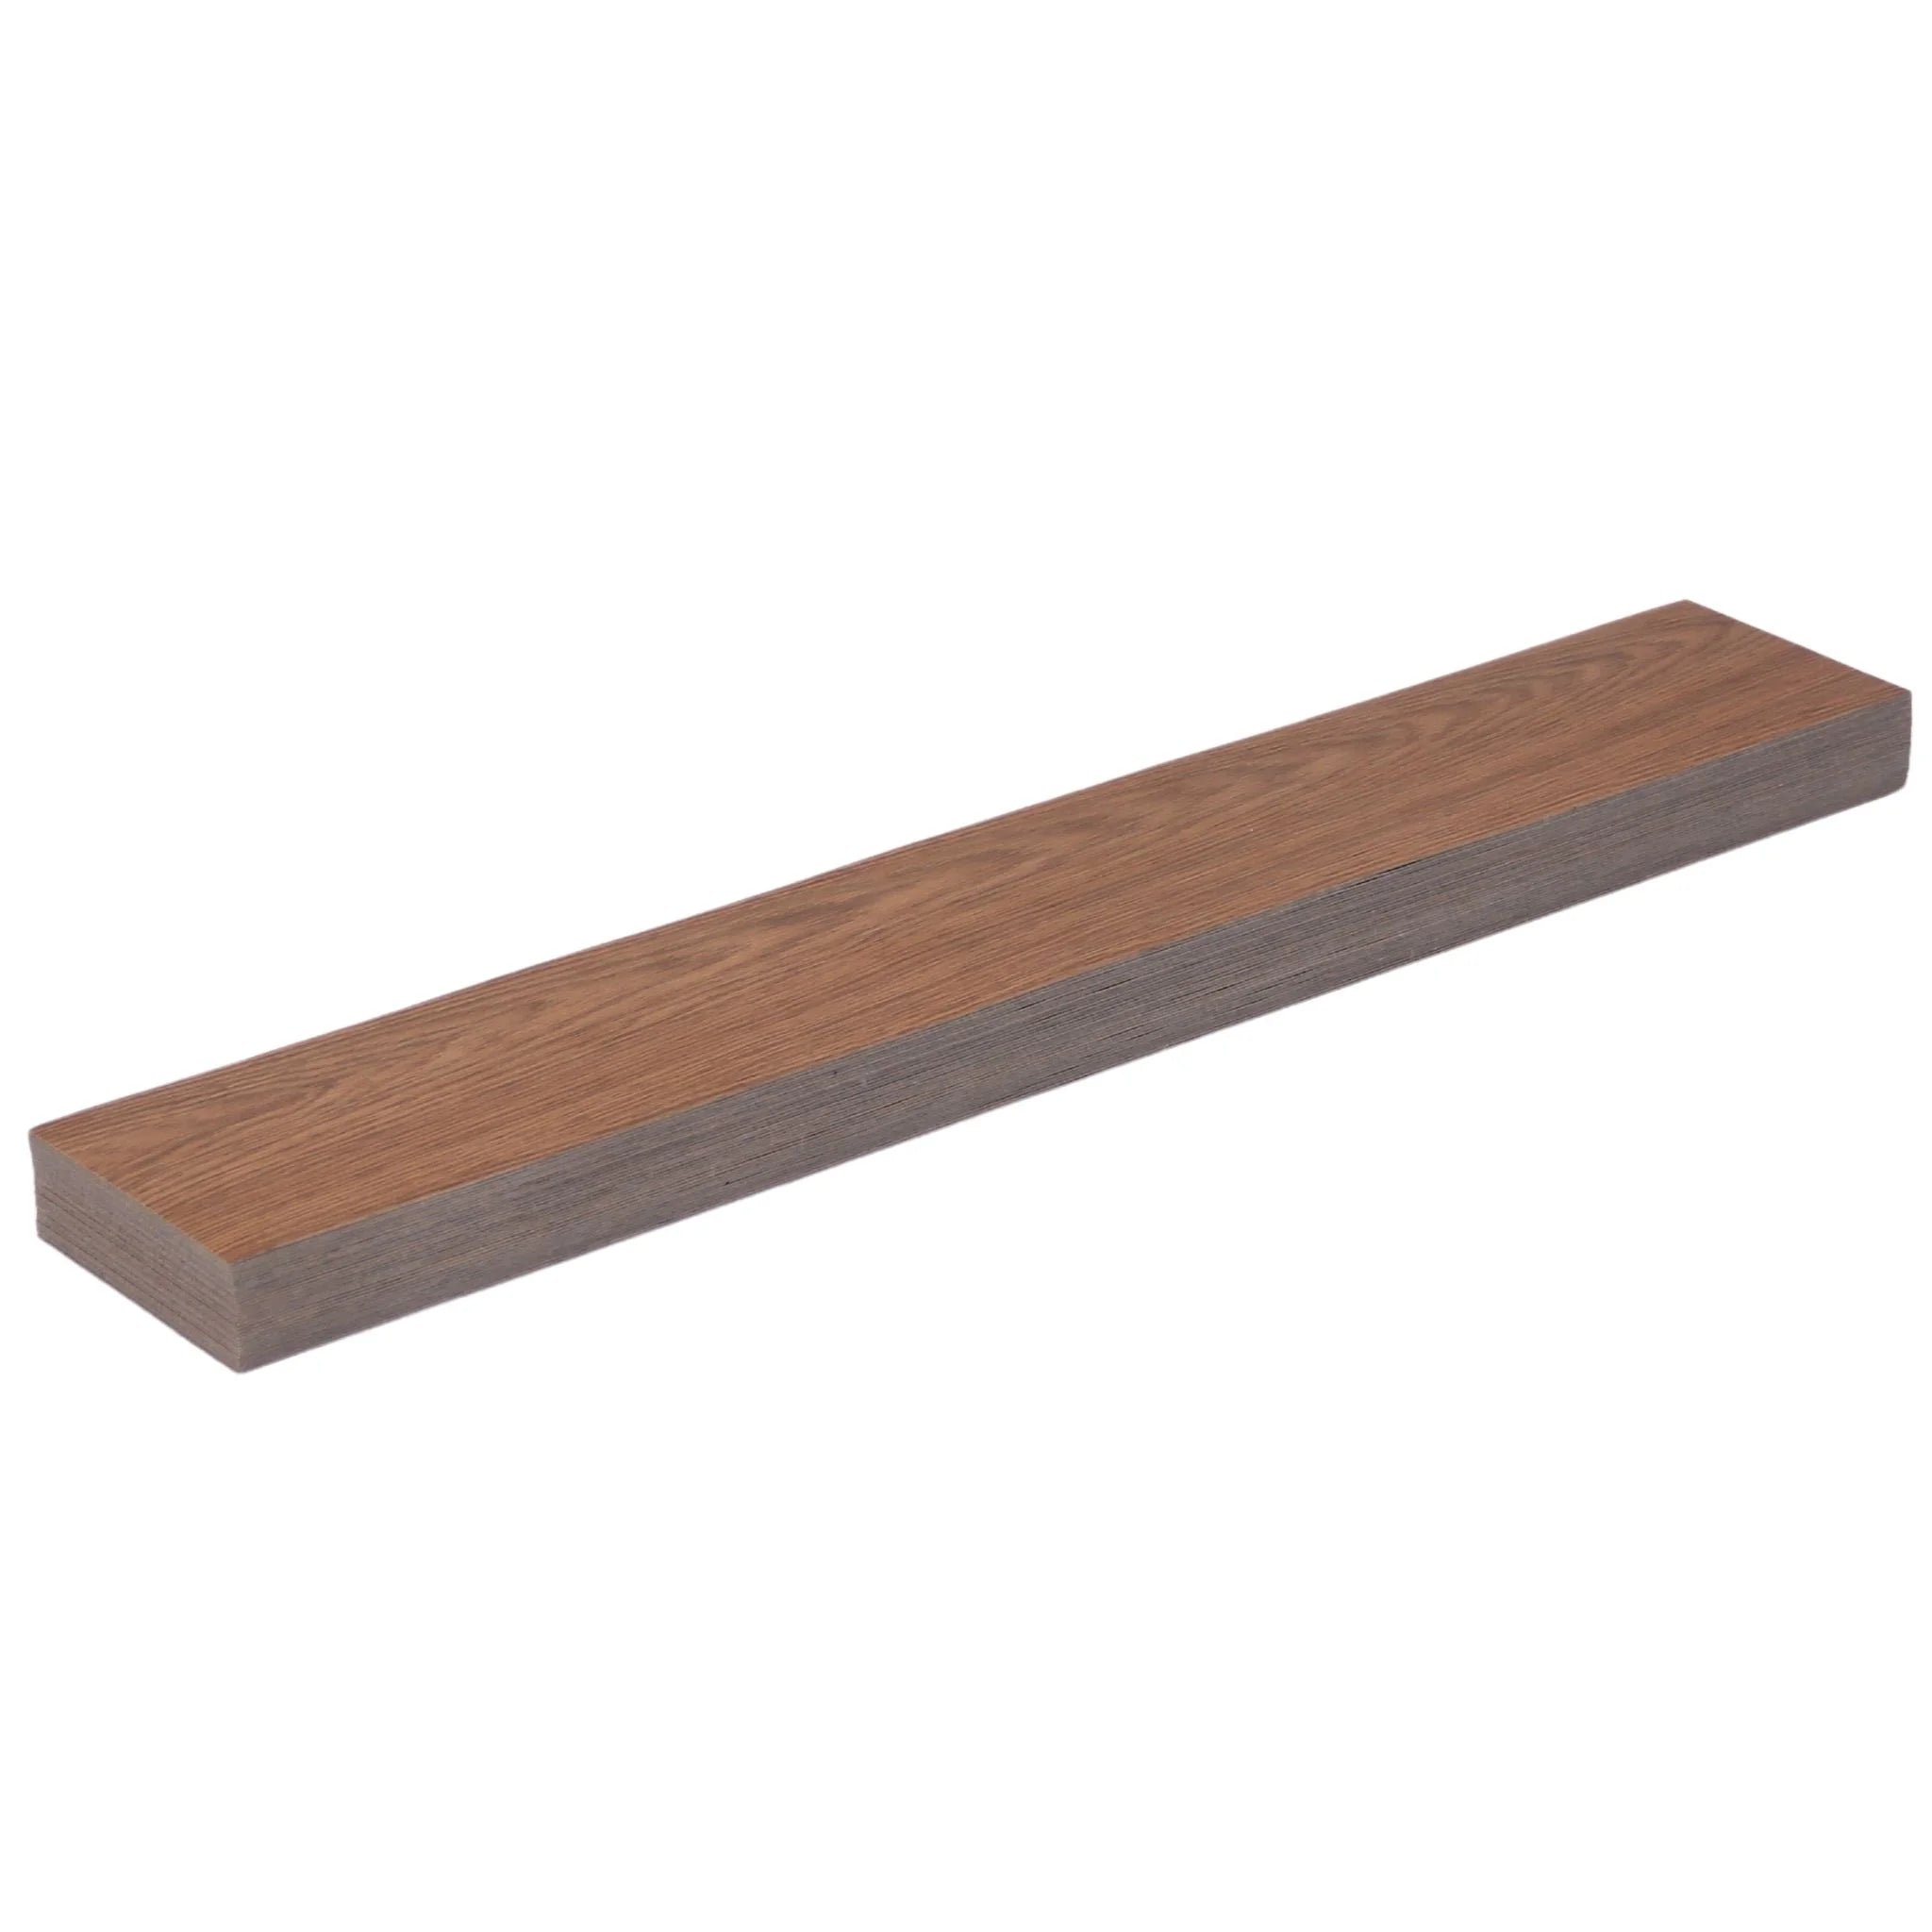 single wood-effect vinyl floor plank showcasing light beige with dark edges